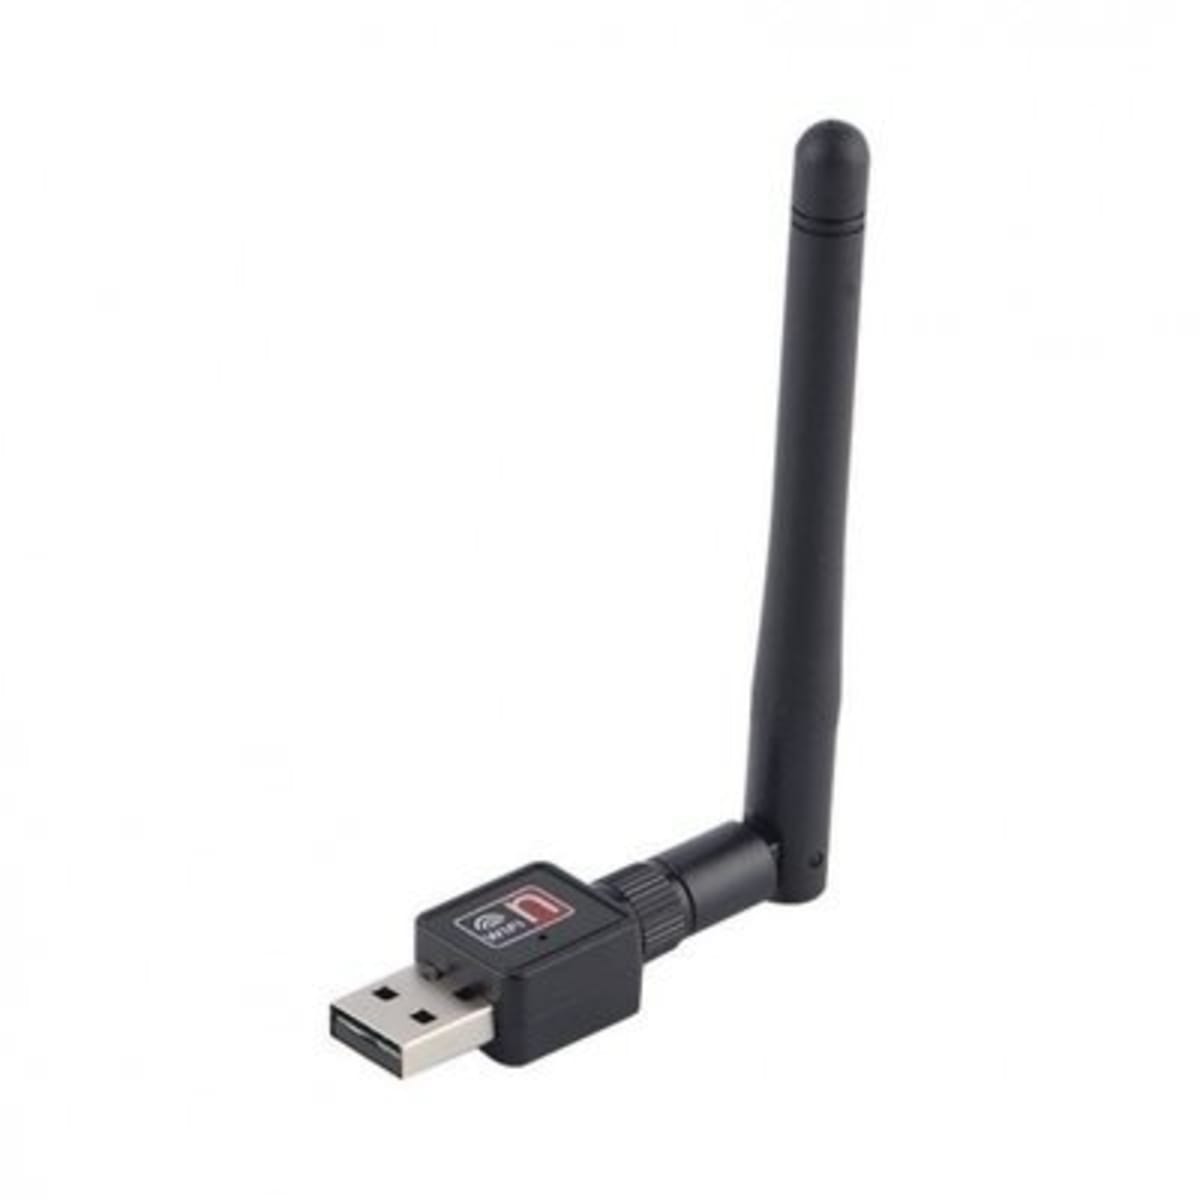 Wireless PC WiFi 11 N USB Adapter LAN Internet Dongle PC/Laptop - 300Mbps Konga Online Shopping